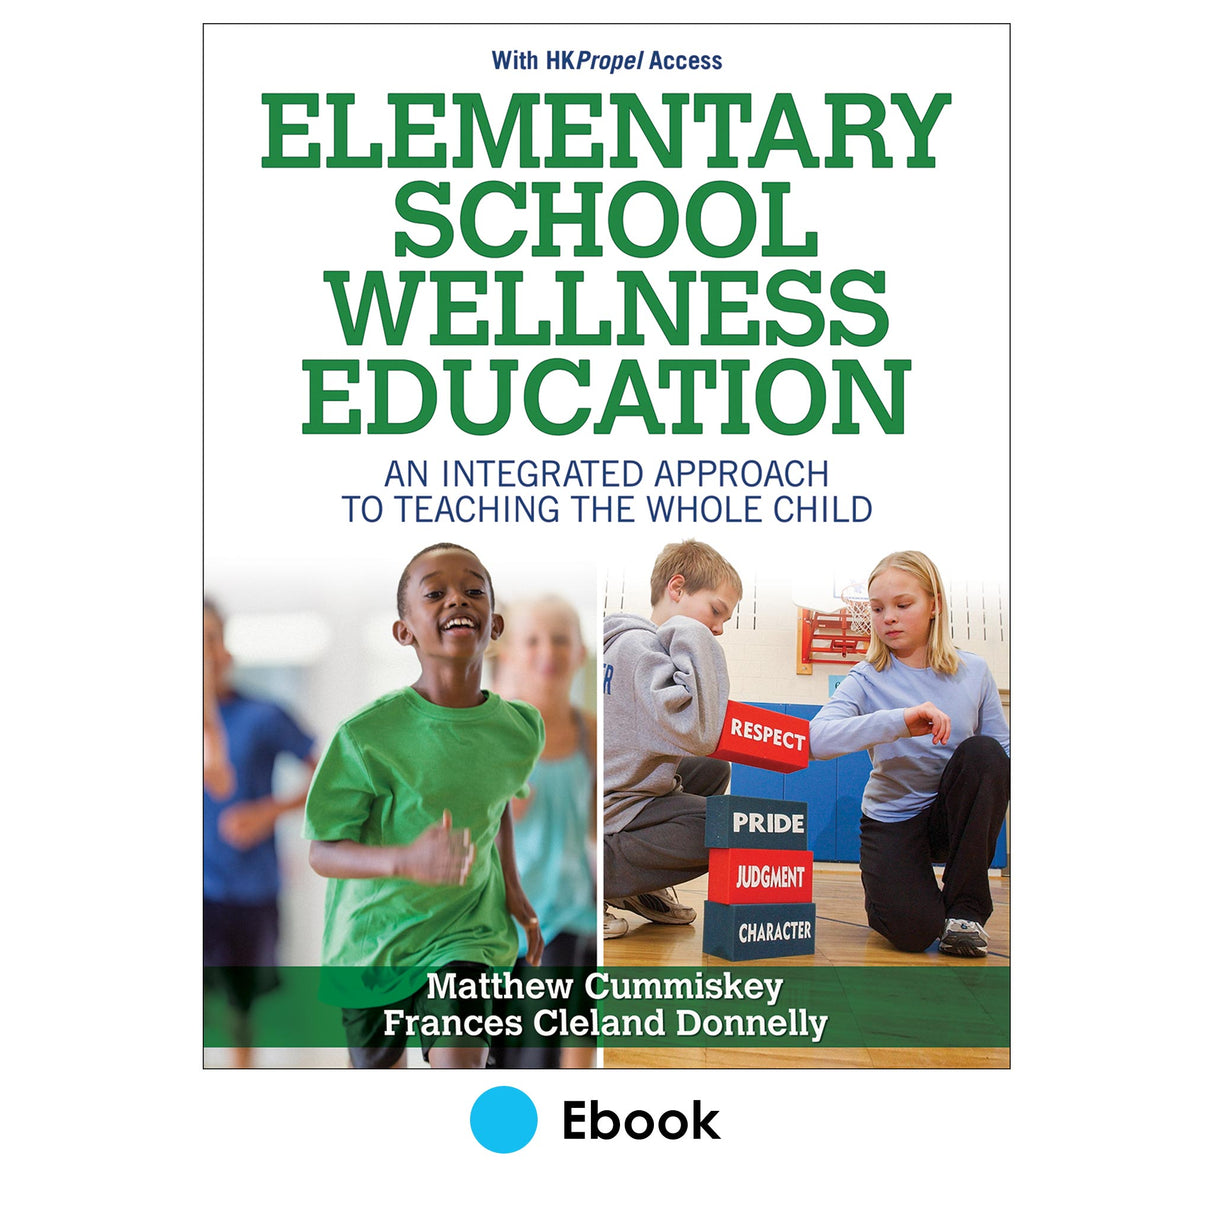 Elementary School Wellness Education Ebook With HKPropel Access